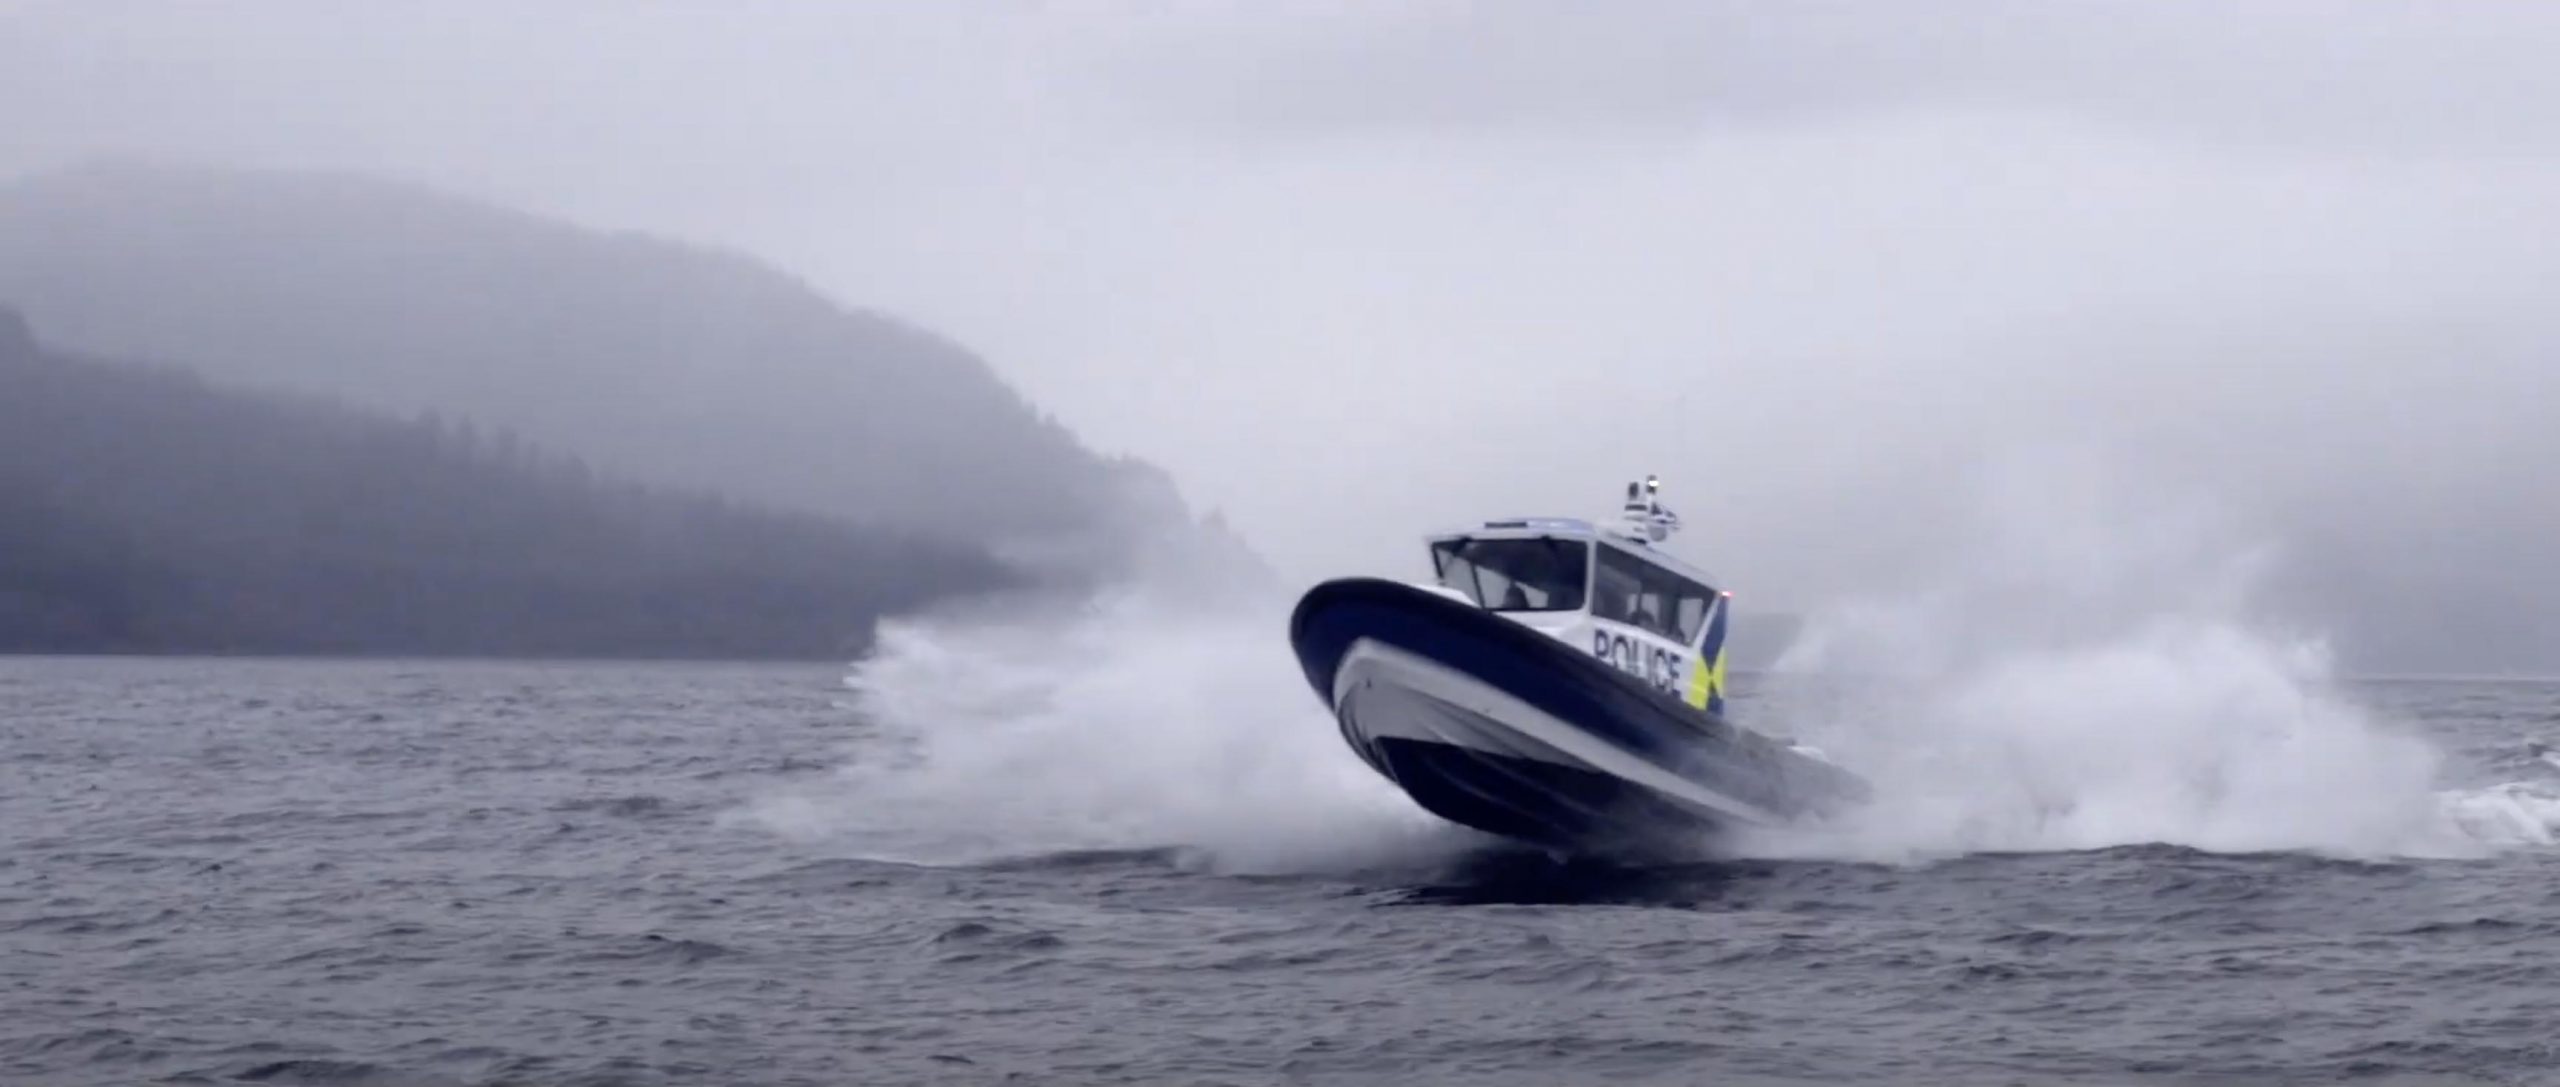 Ultimate Boats - Automotive Video Production